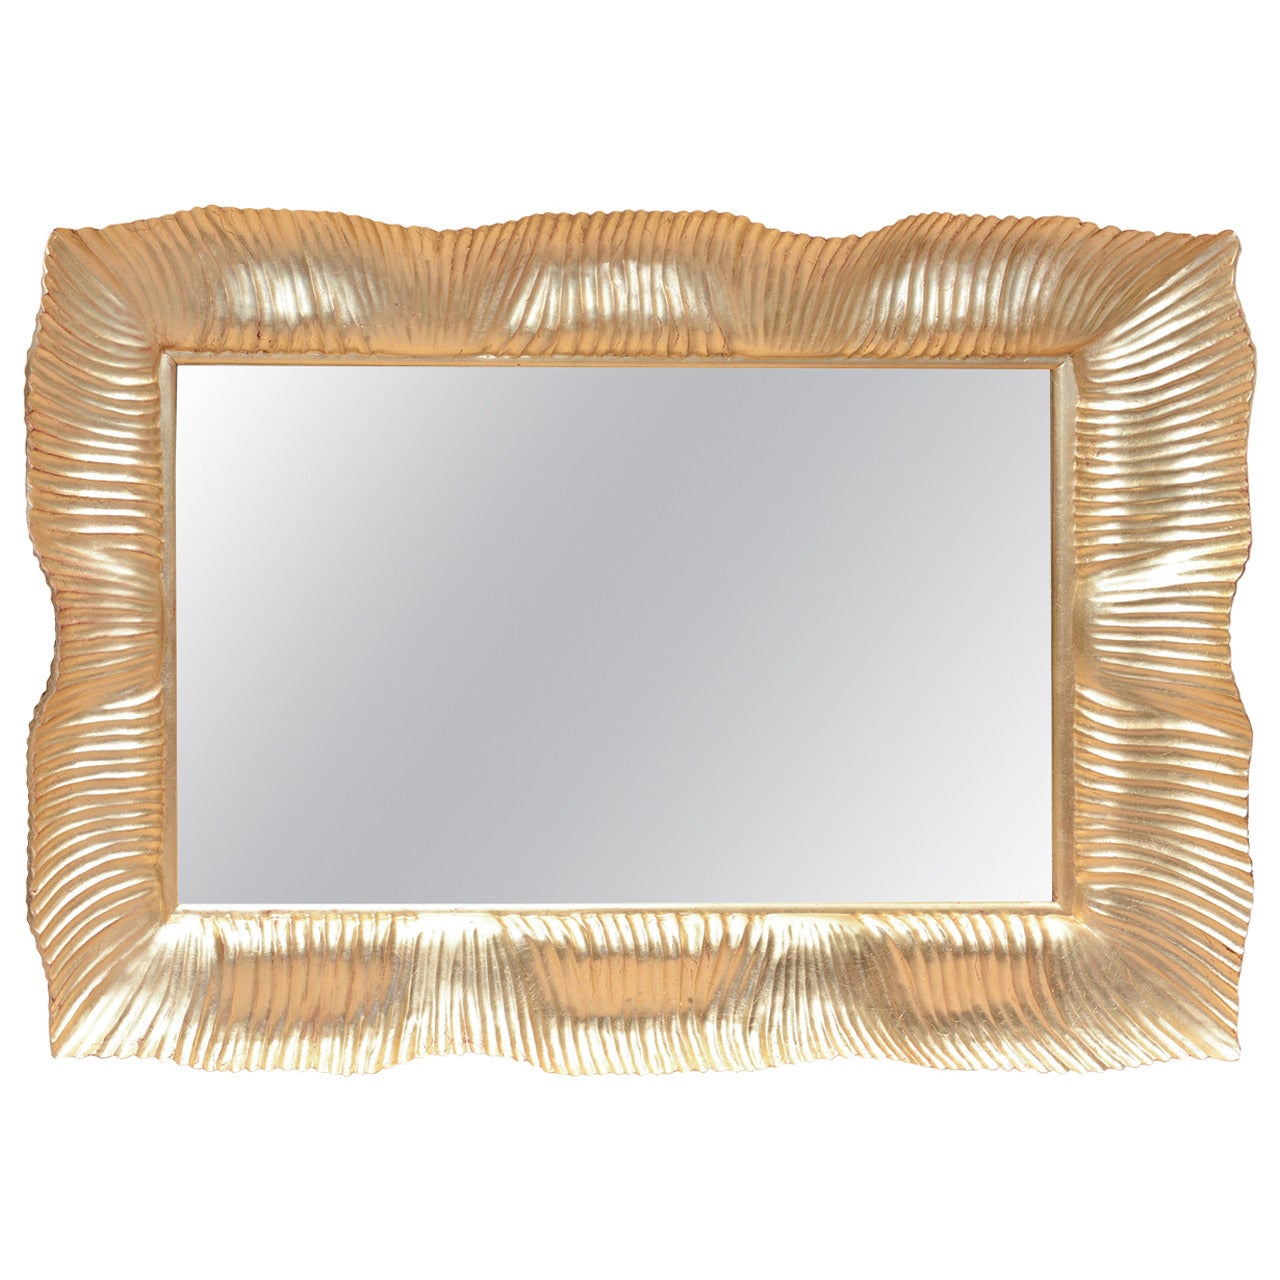 Monumental Italian 24-Karat Gold Leaf over Wood Beveled Ridged Horizontal Mirror